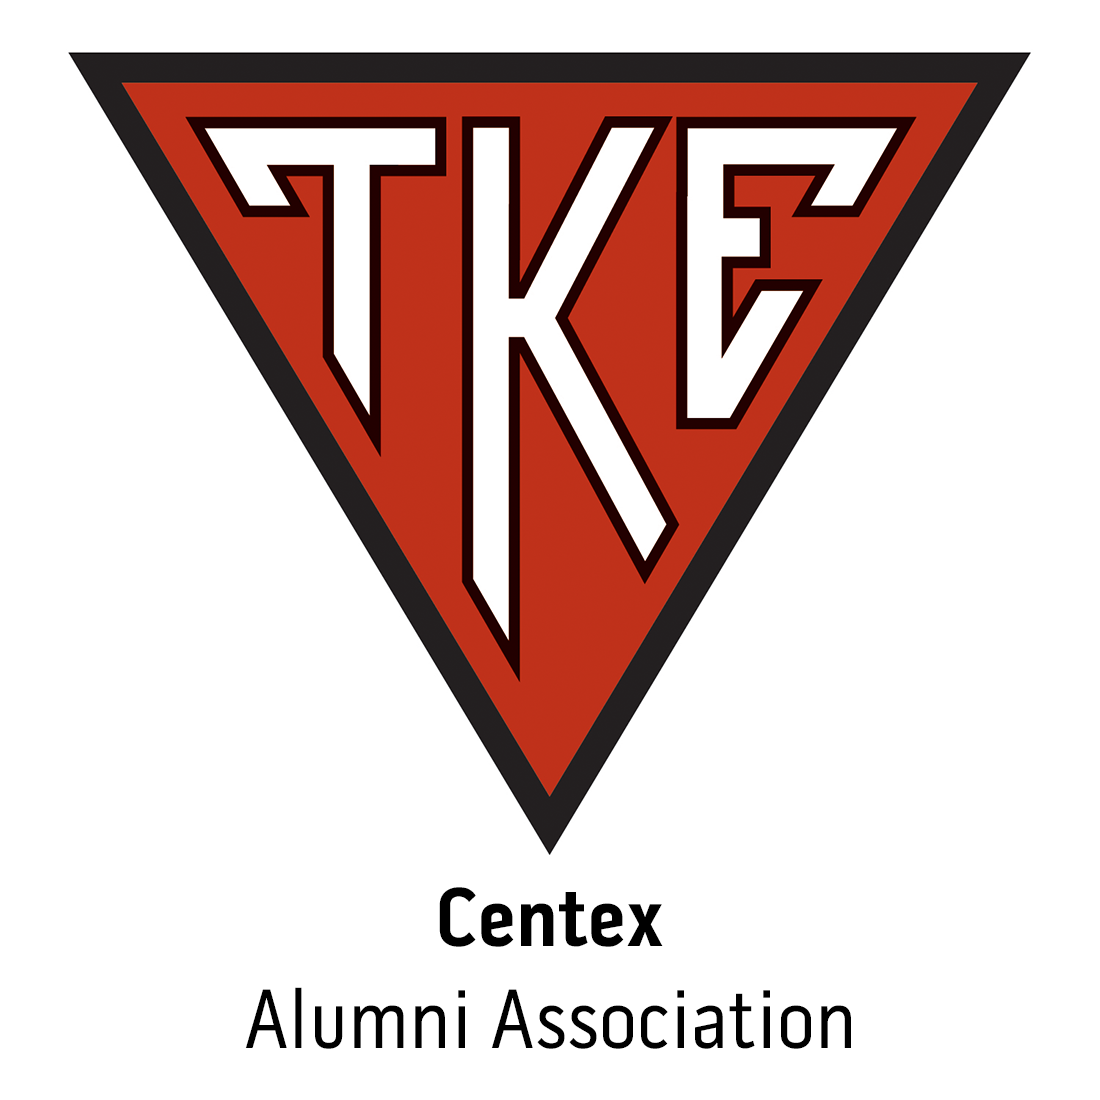 Centex Alumni Association for Central Texas